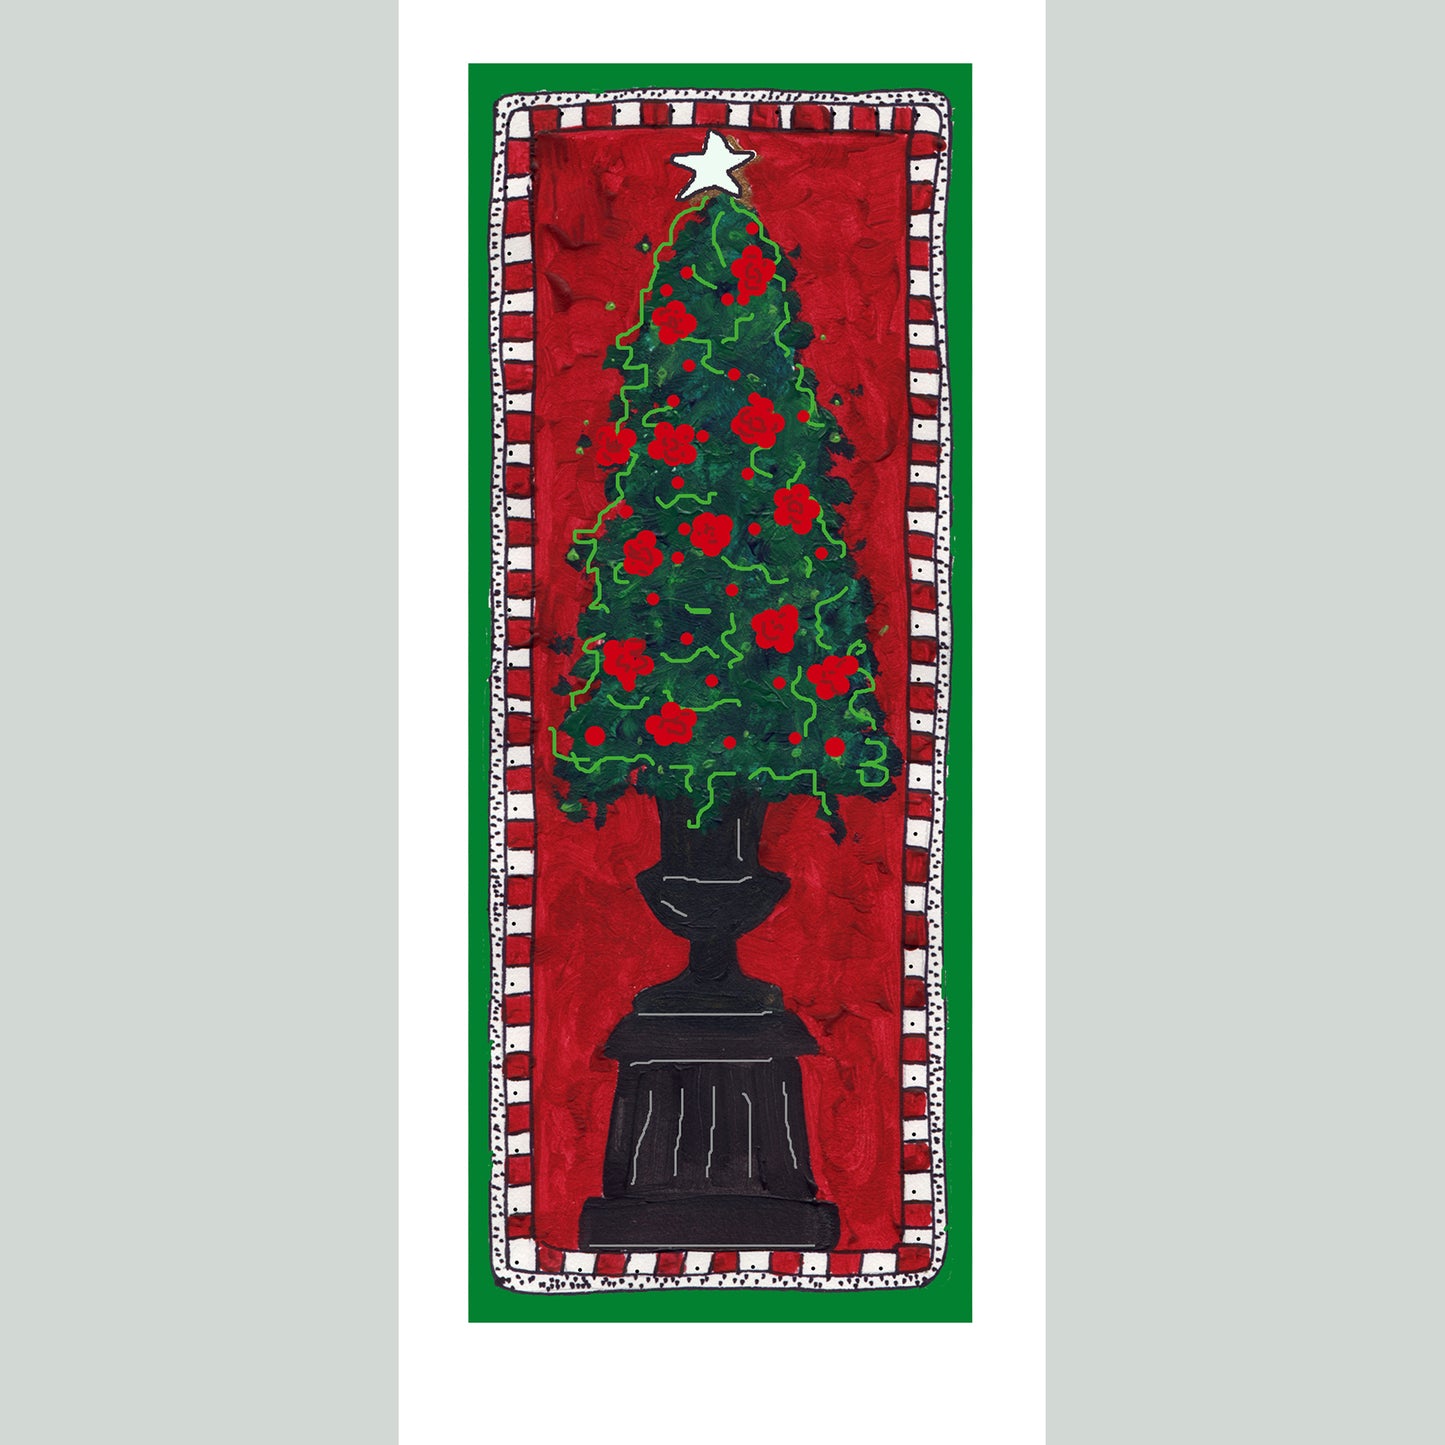 A Very Merry Christmas - A Christmas Tree Note Card (Single Card)